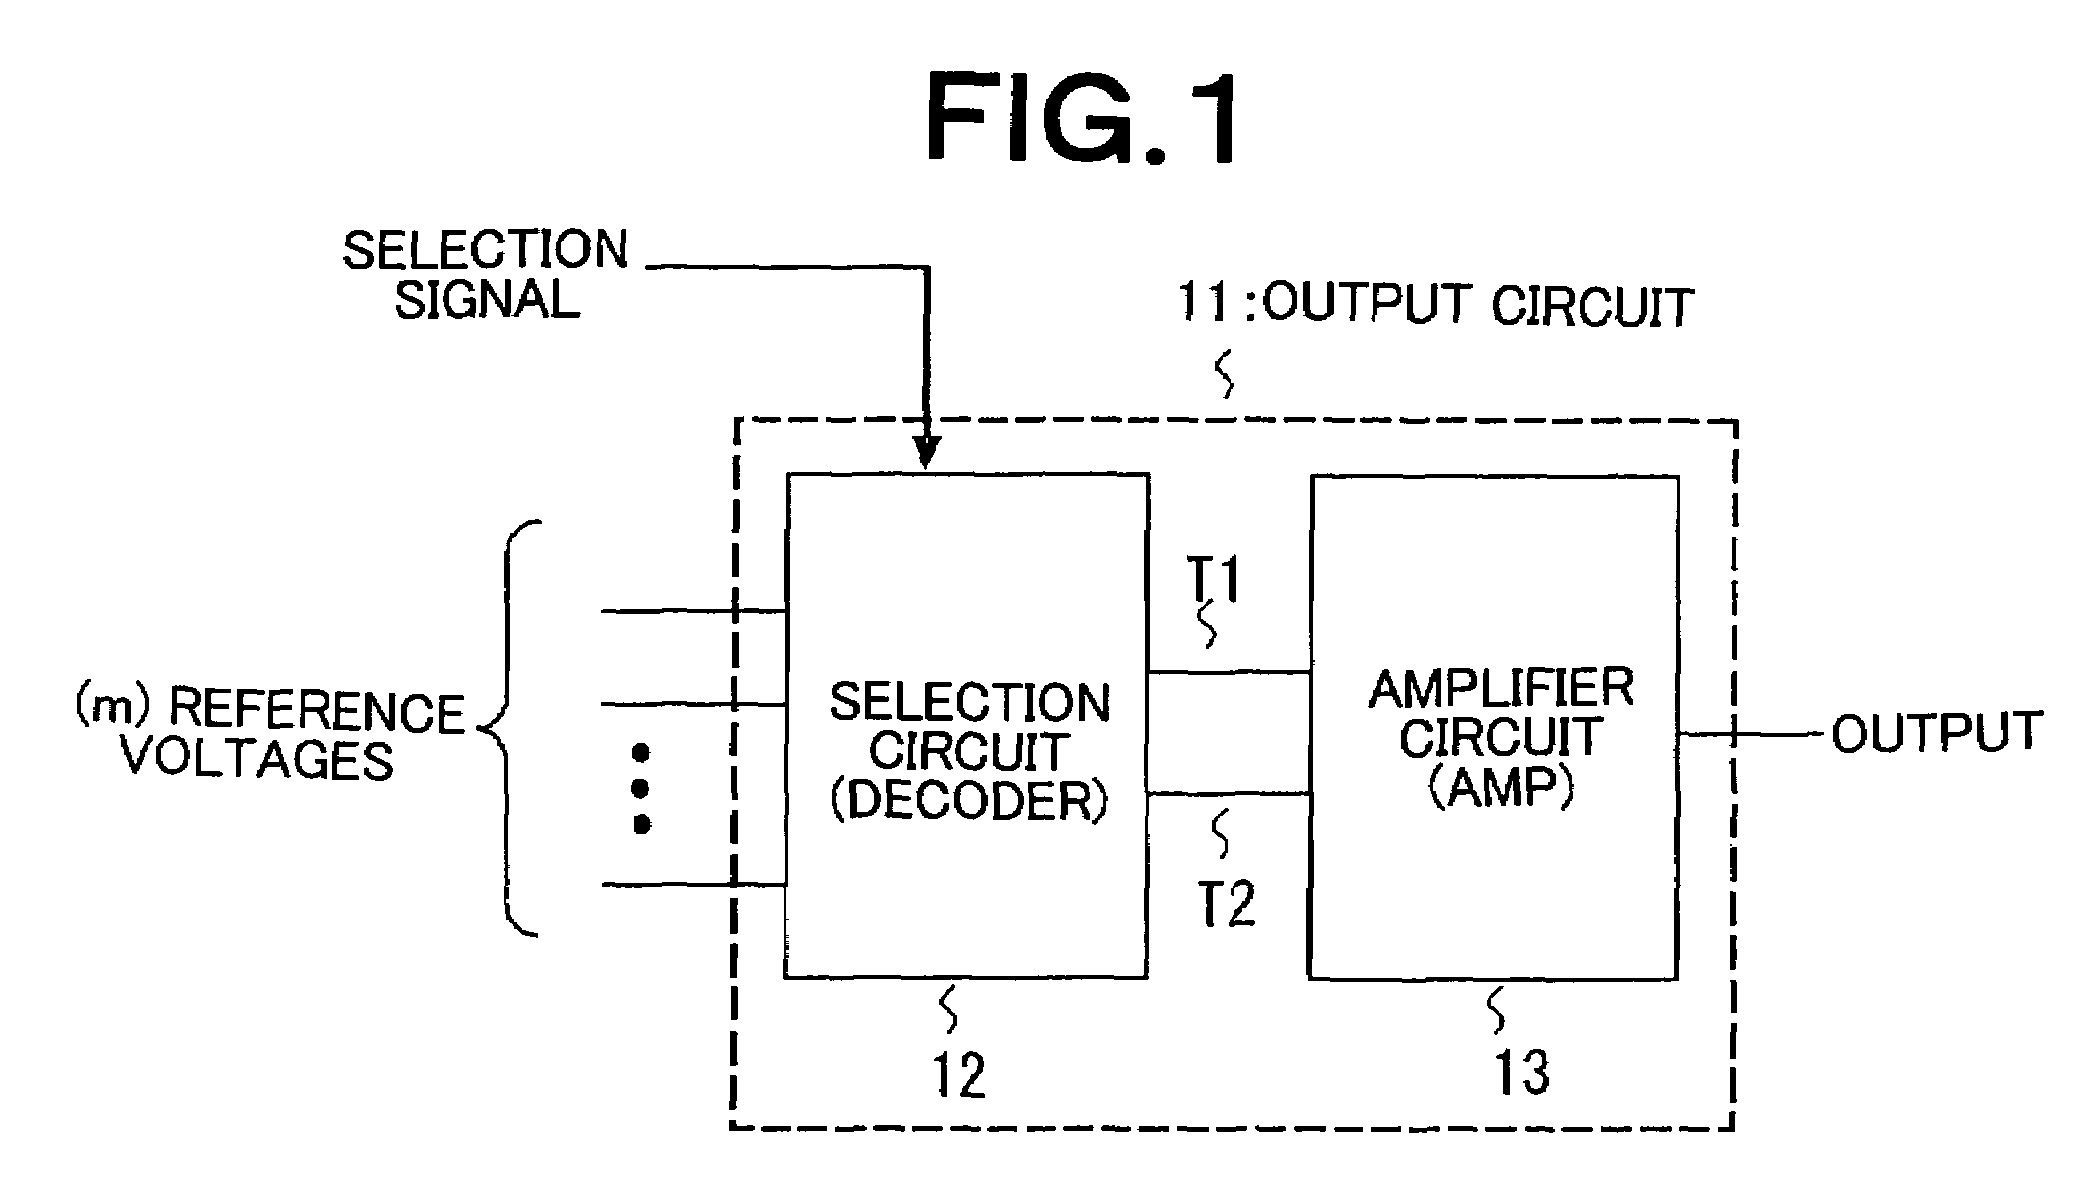 Output circuit, digital/analog circuit and display apparatus